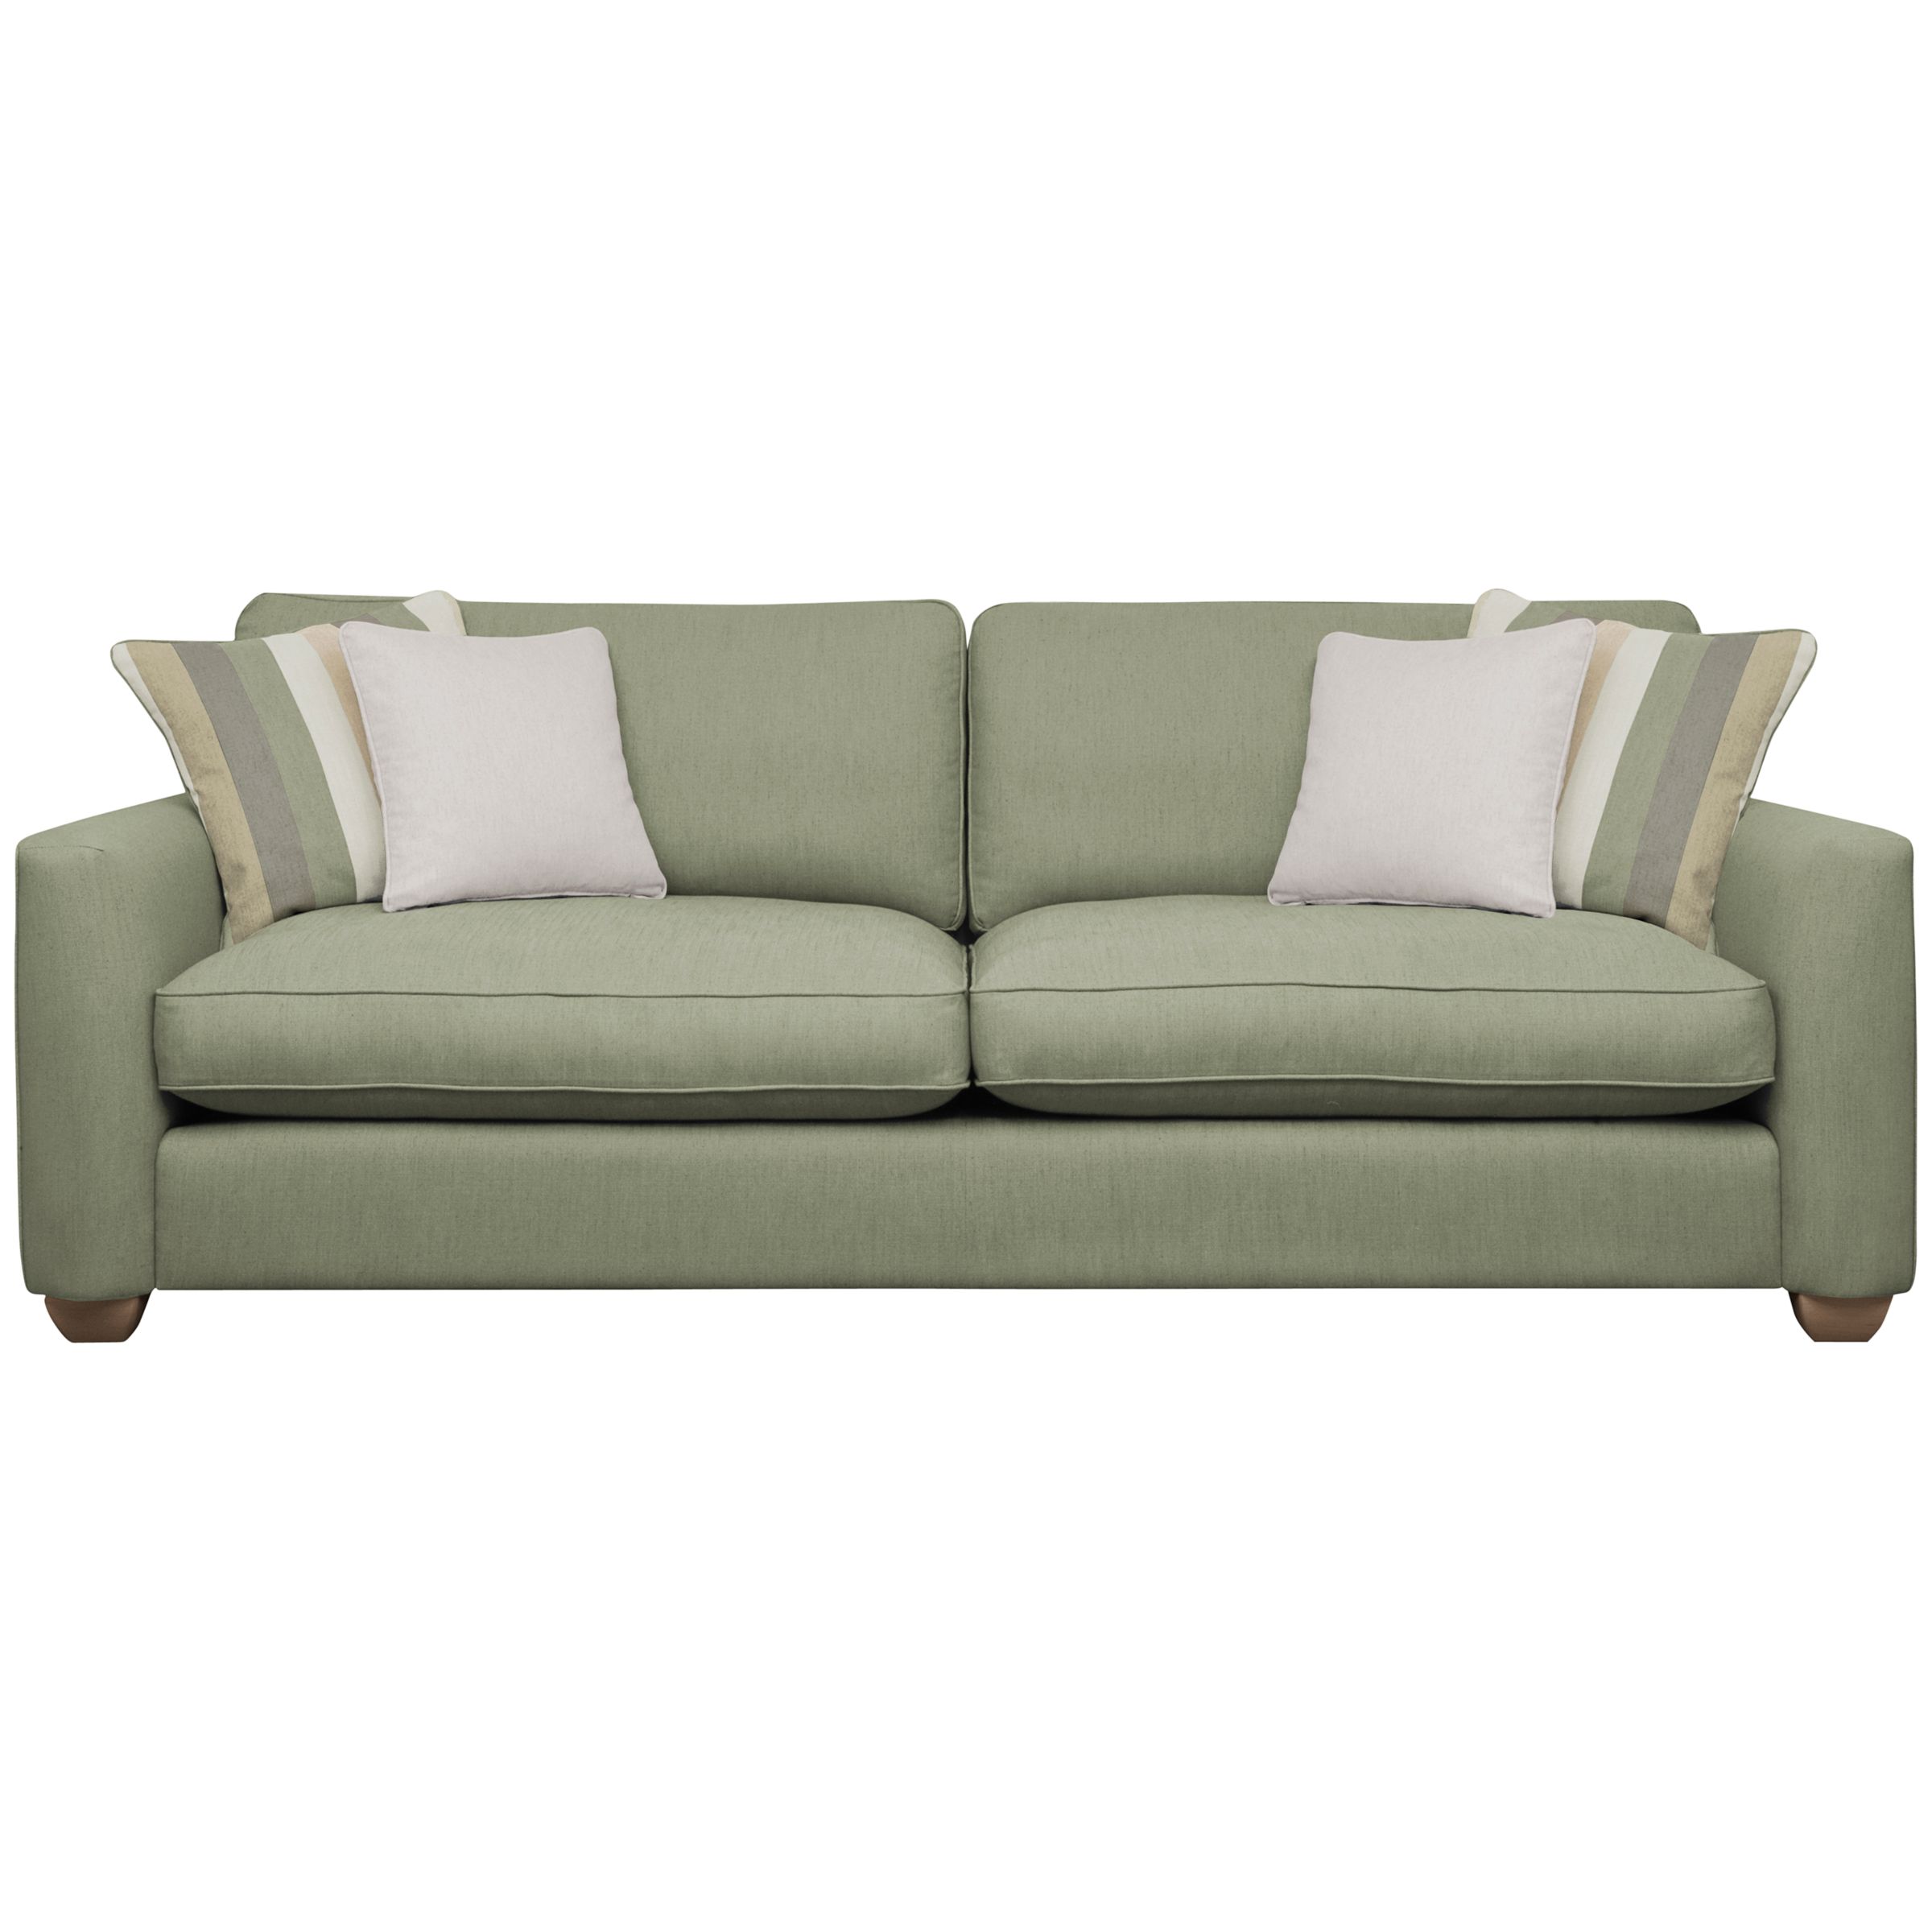 John Lewis Walton Grand Sofa, Sage, width 233cm